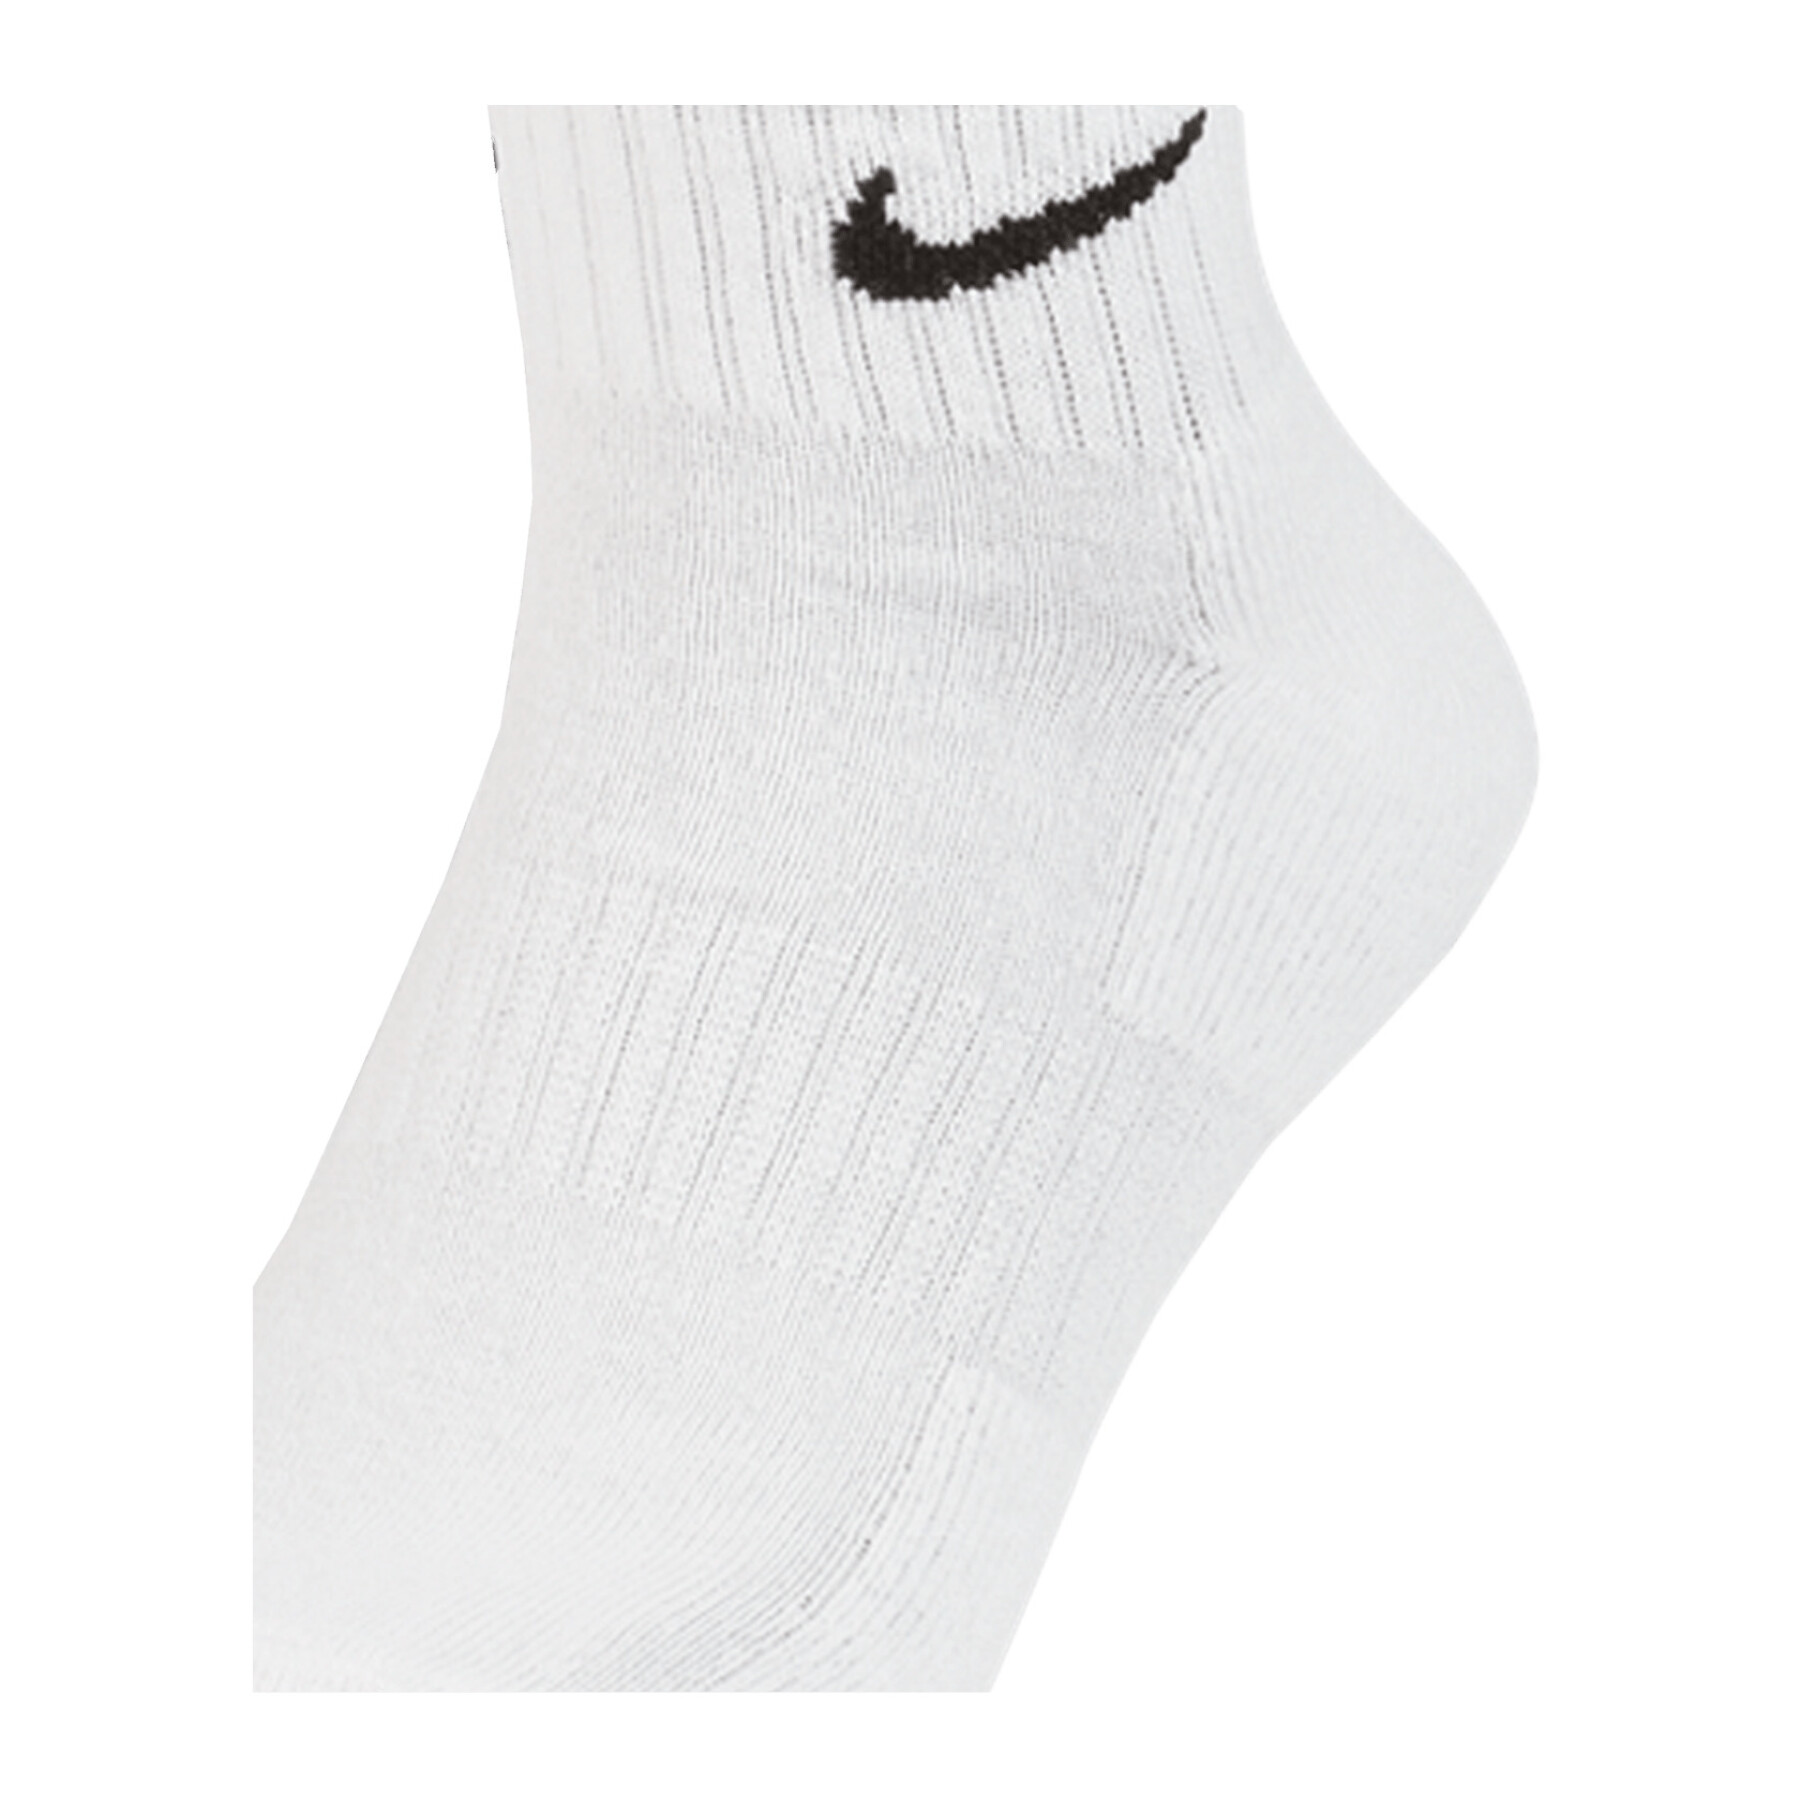 Socken Nike Everyday Lightweight (x3)